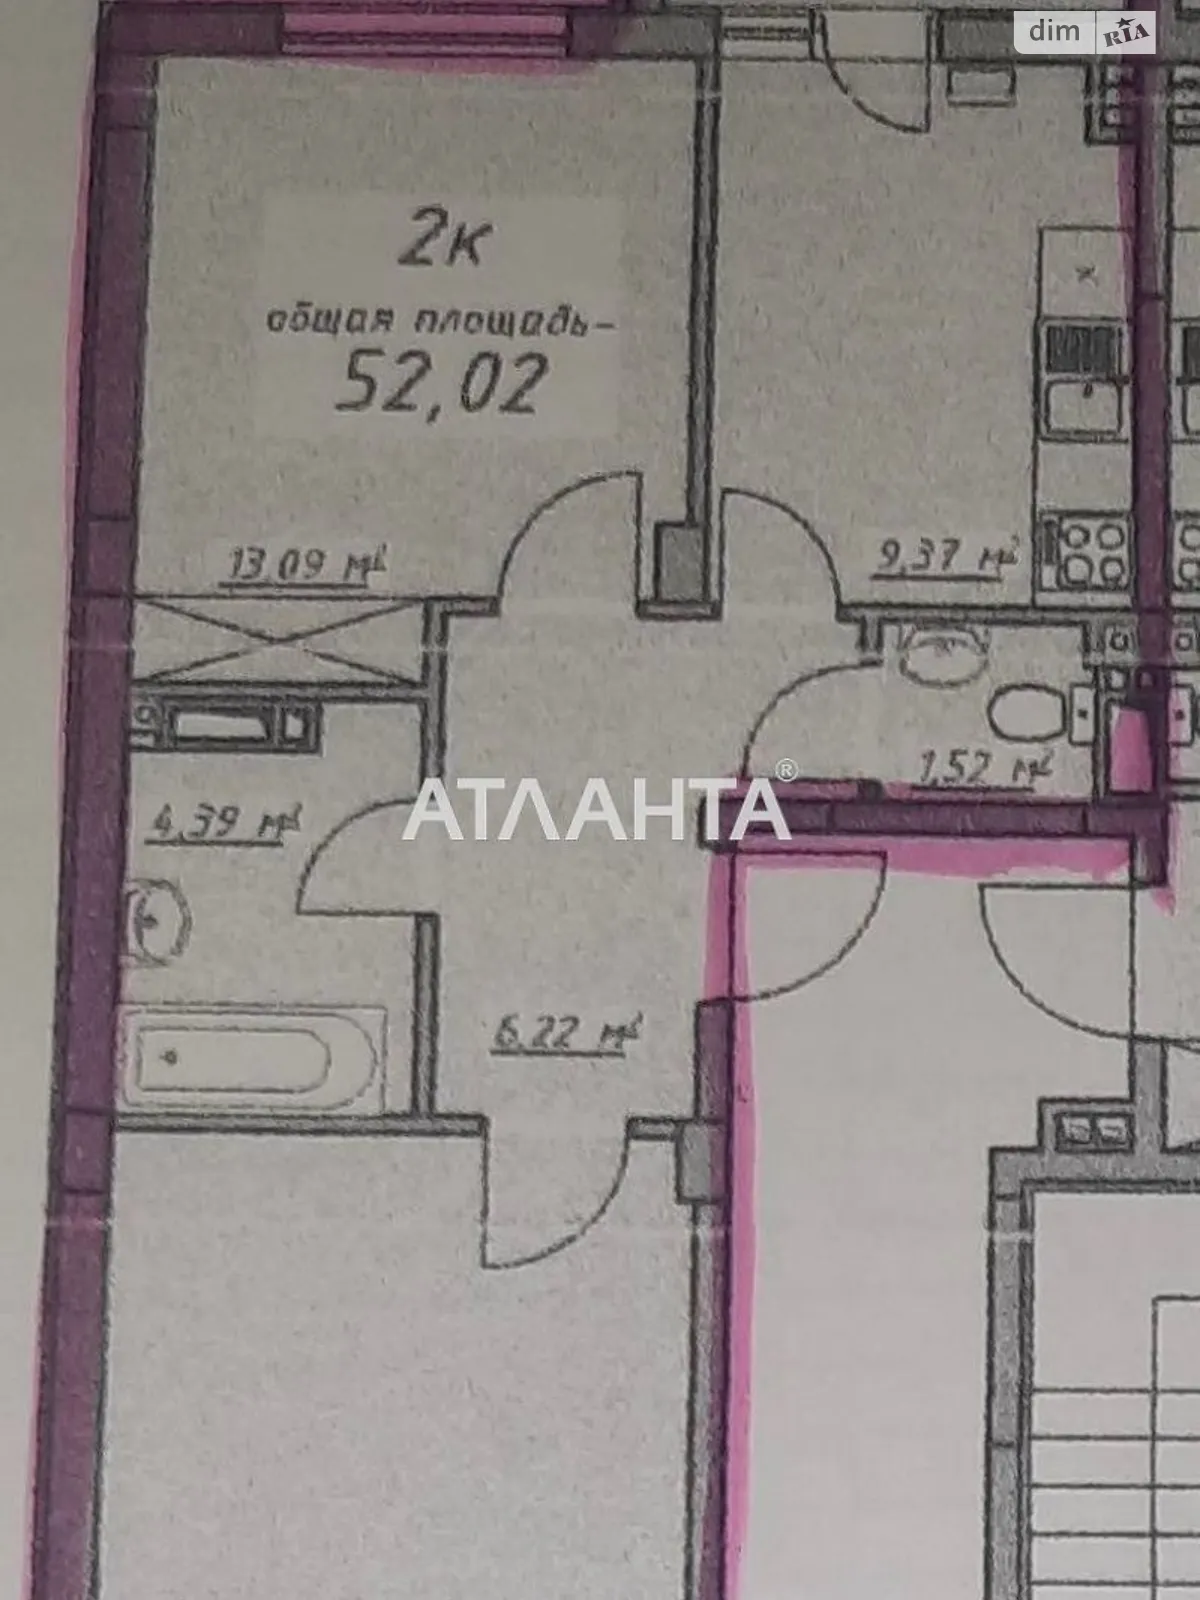 Продается 2-комнатная квартира 52.02 кв. м в Авангарде - фото 3